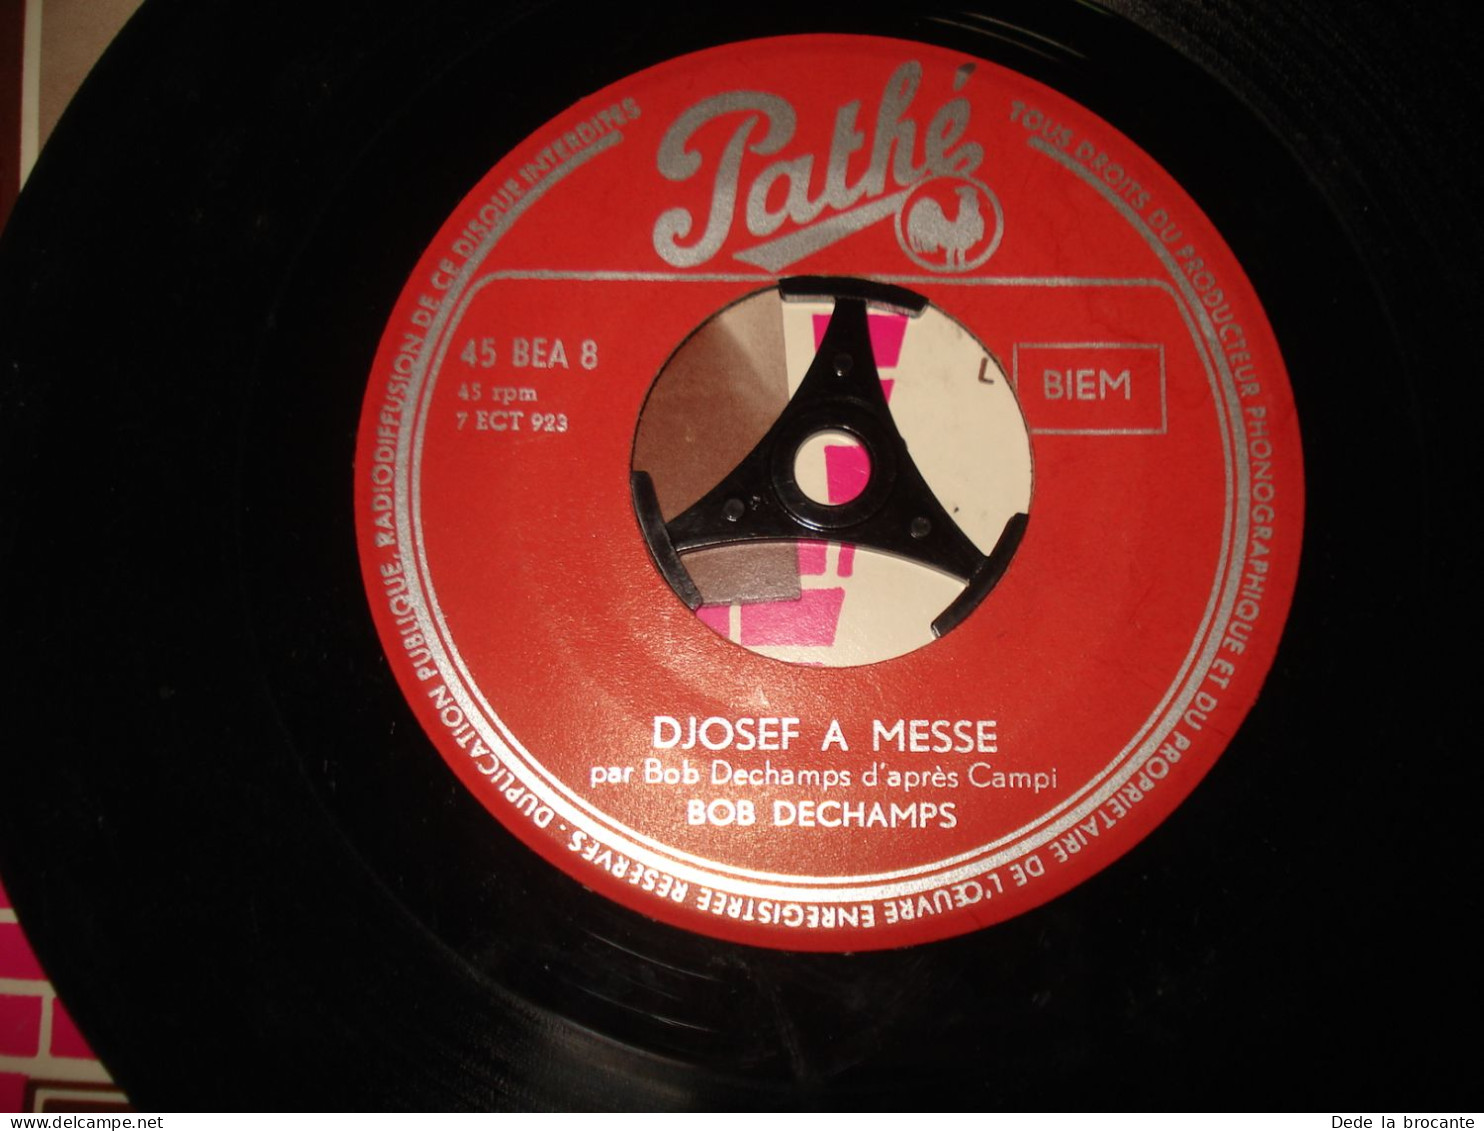 B12 (2) / Bob Dechamps – Djosef A Messe - EP – Pathé – 45 BEA 8 - BE 196?  EX/NM - Humor, Cabaret